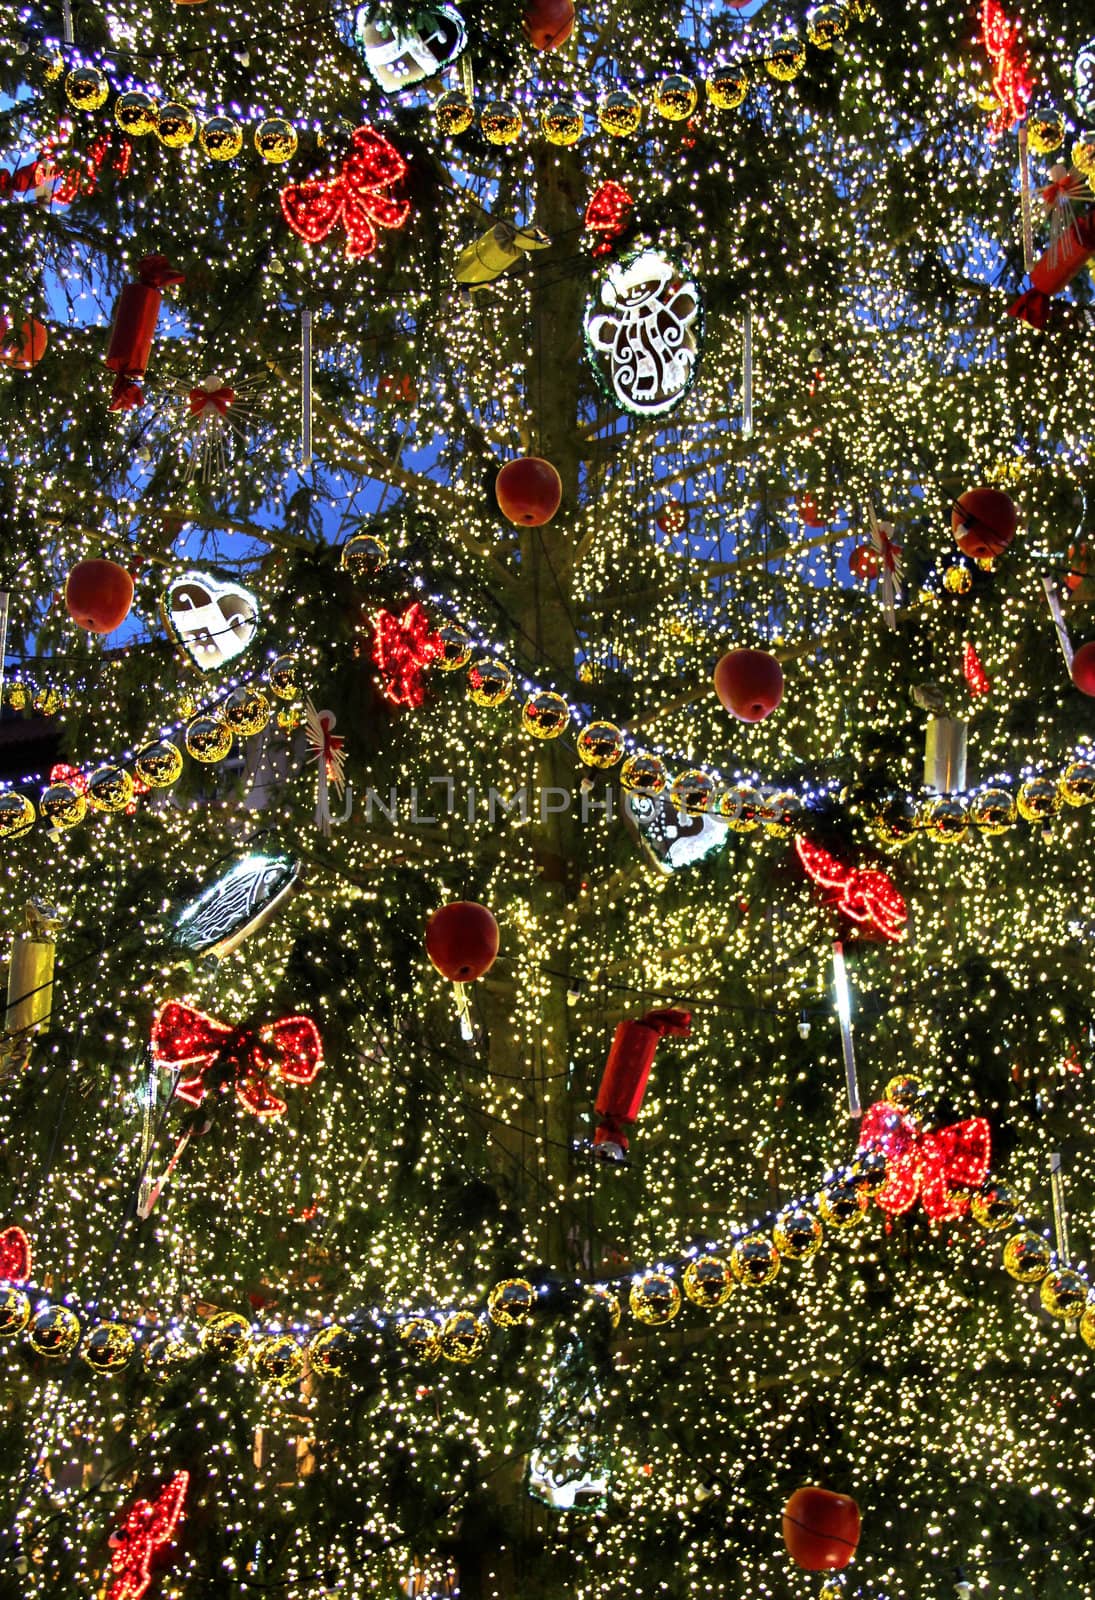 Big beautiful well decorated Christmas tree by tanouchka